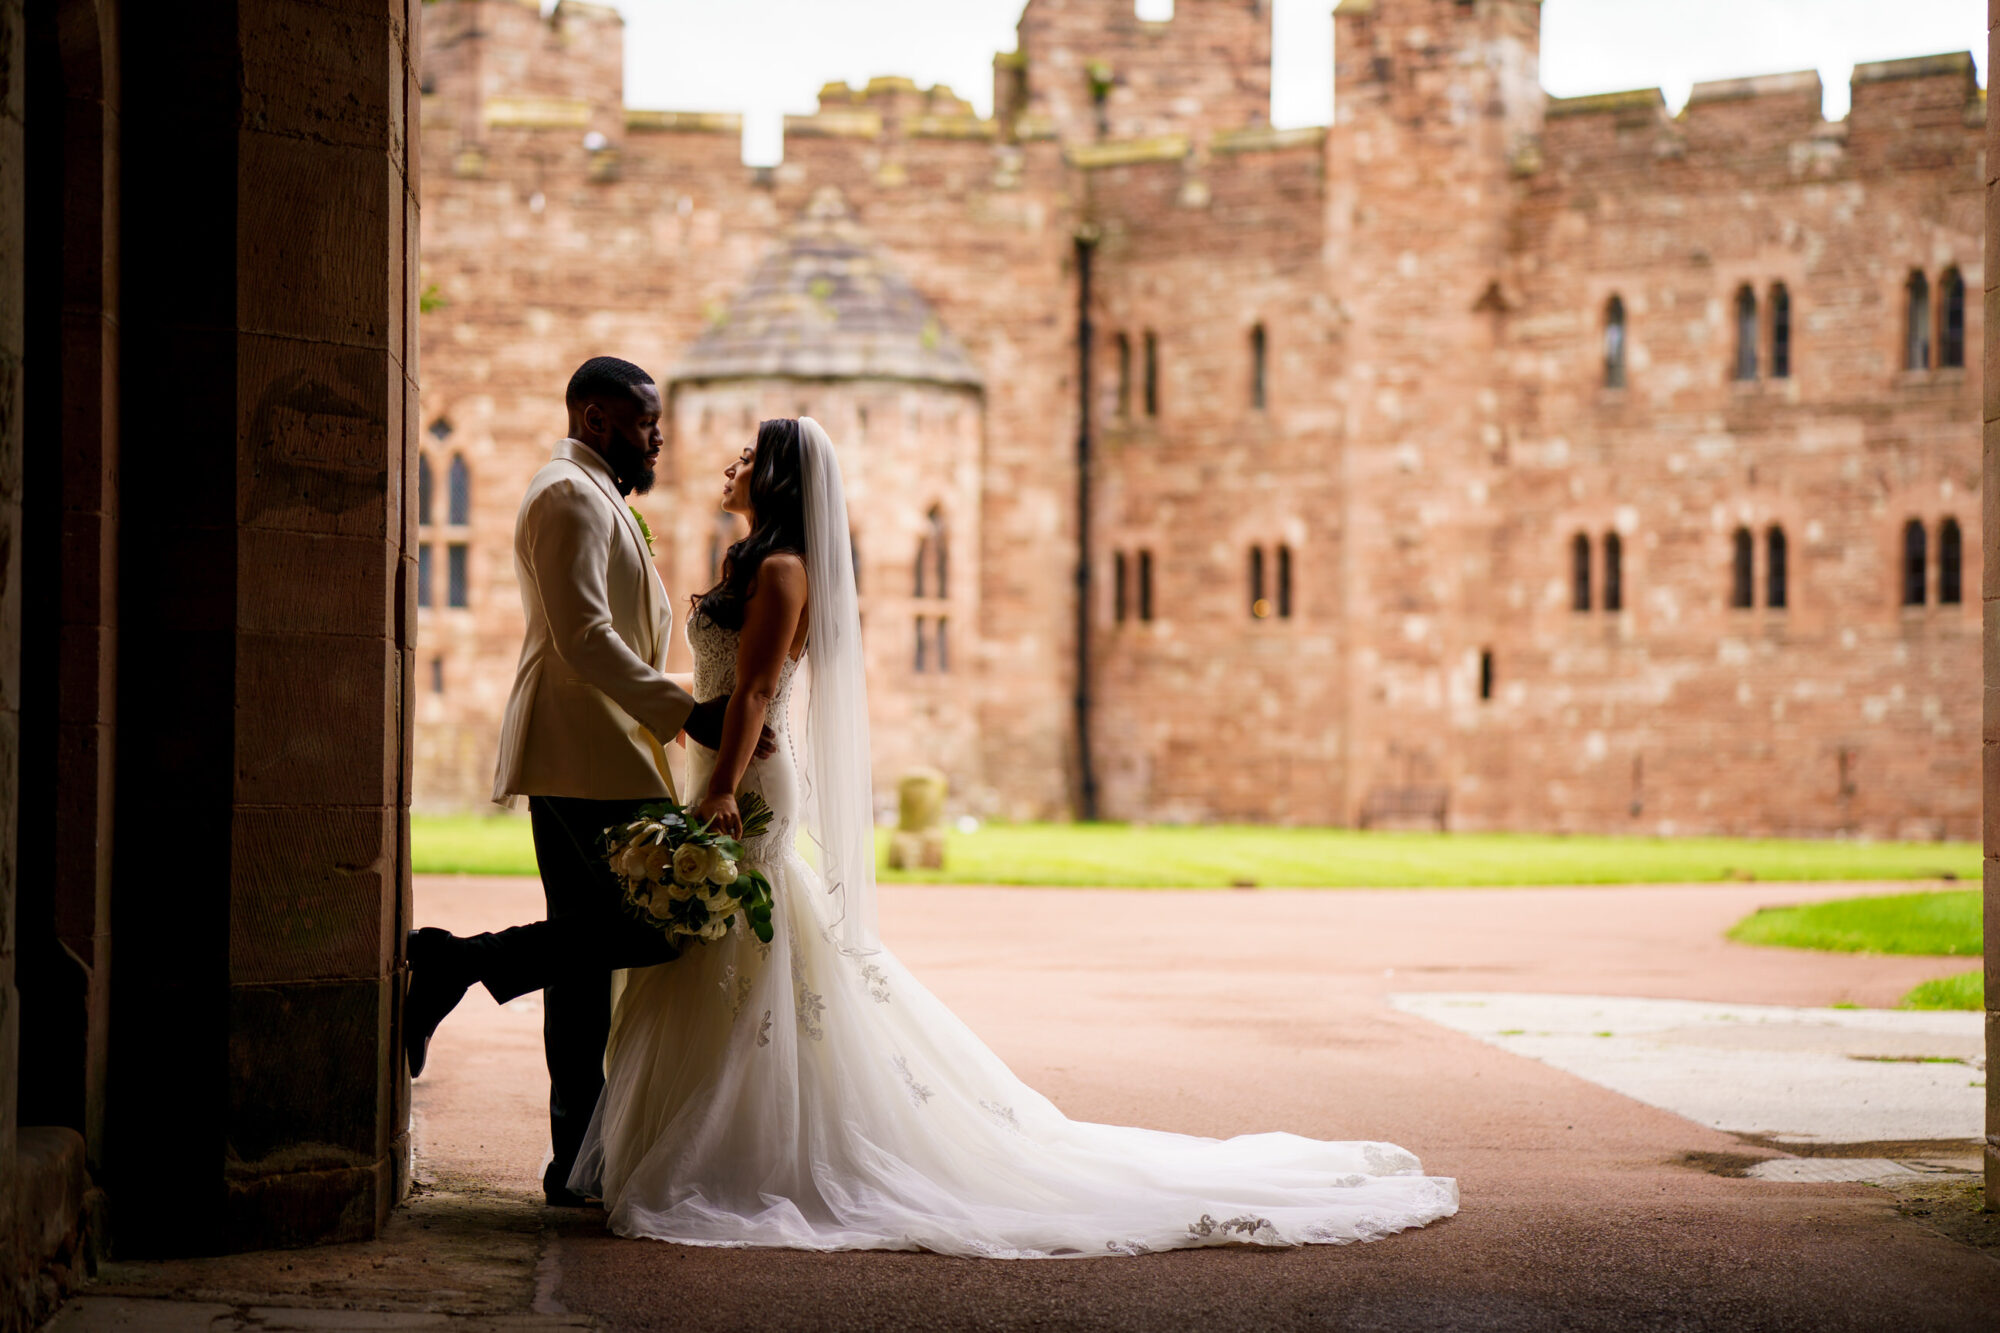 The best wedding photos at Peckforton Castle